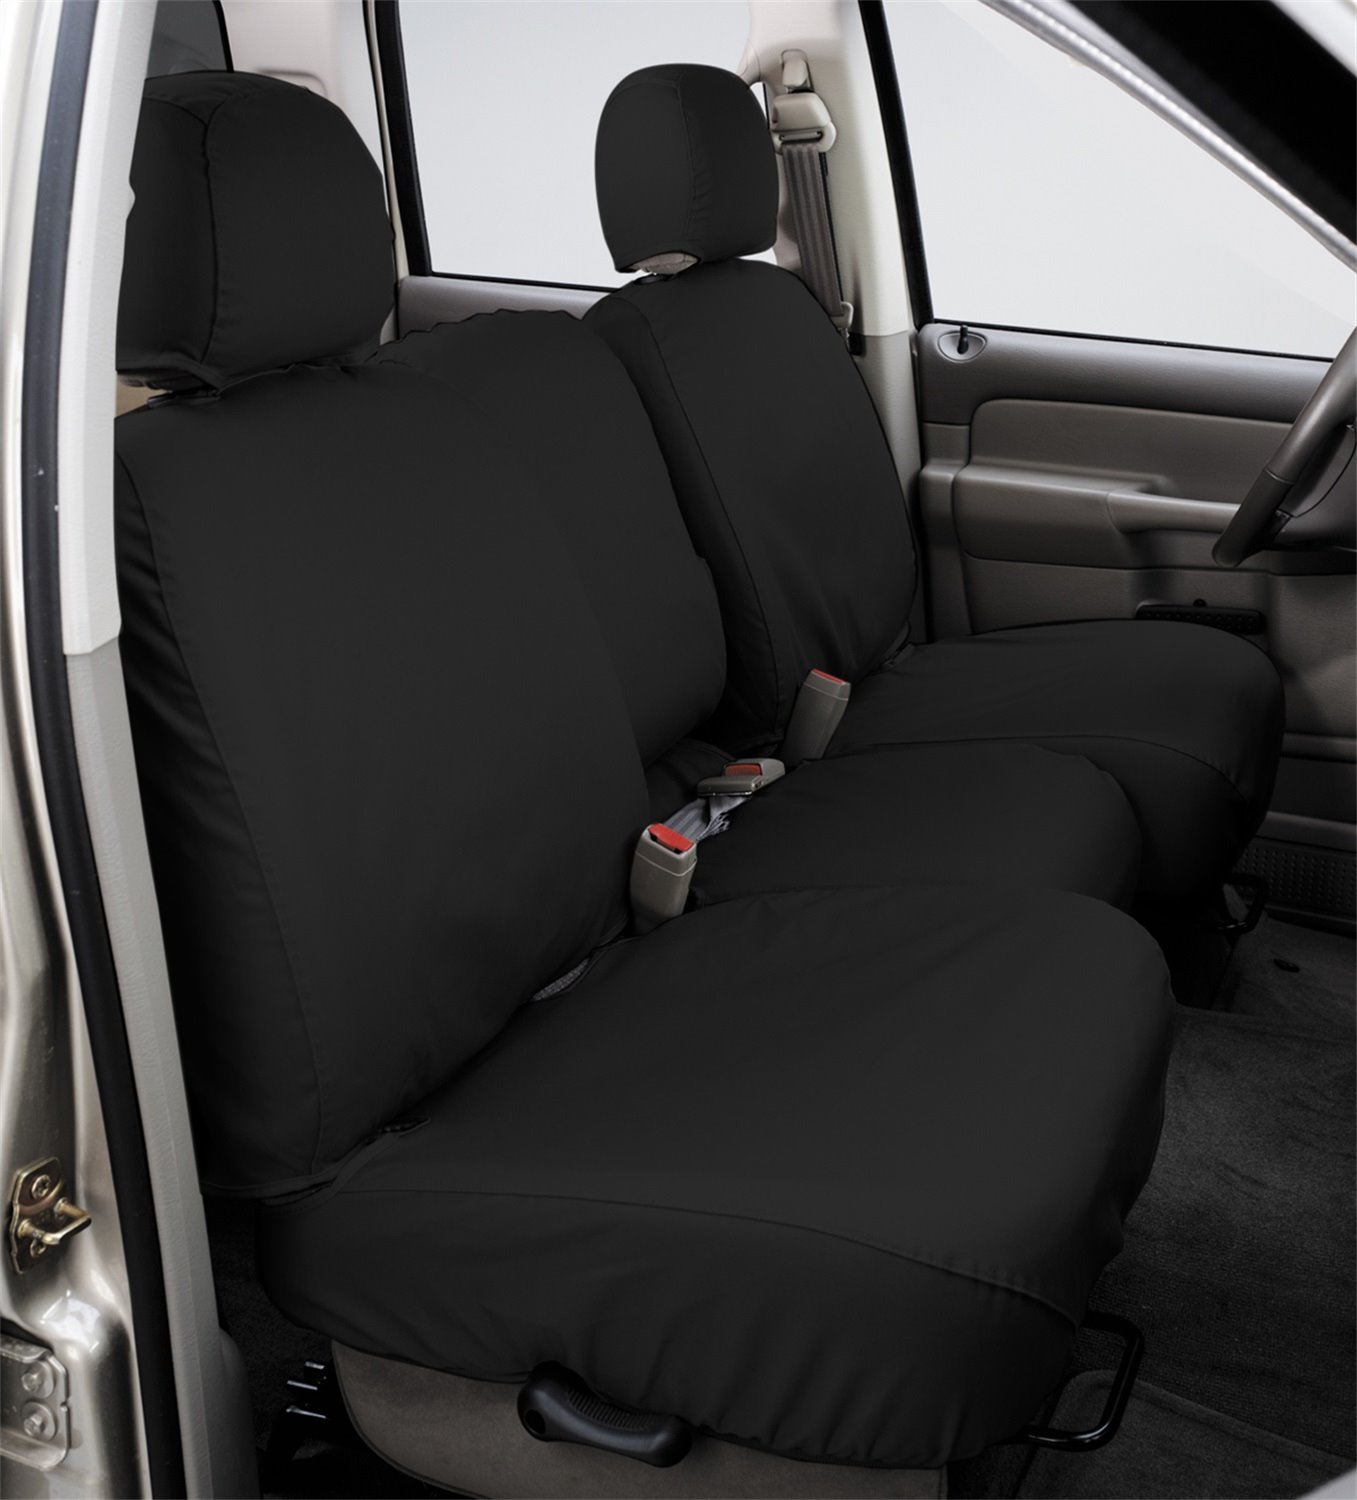 SeatSaver Seat Cover Fits 2004-13 Chevy Silverado/GMC Sierra